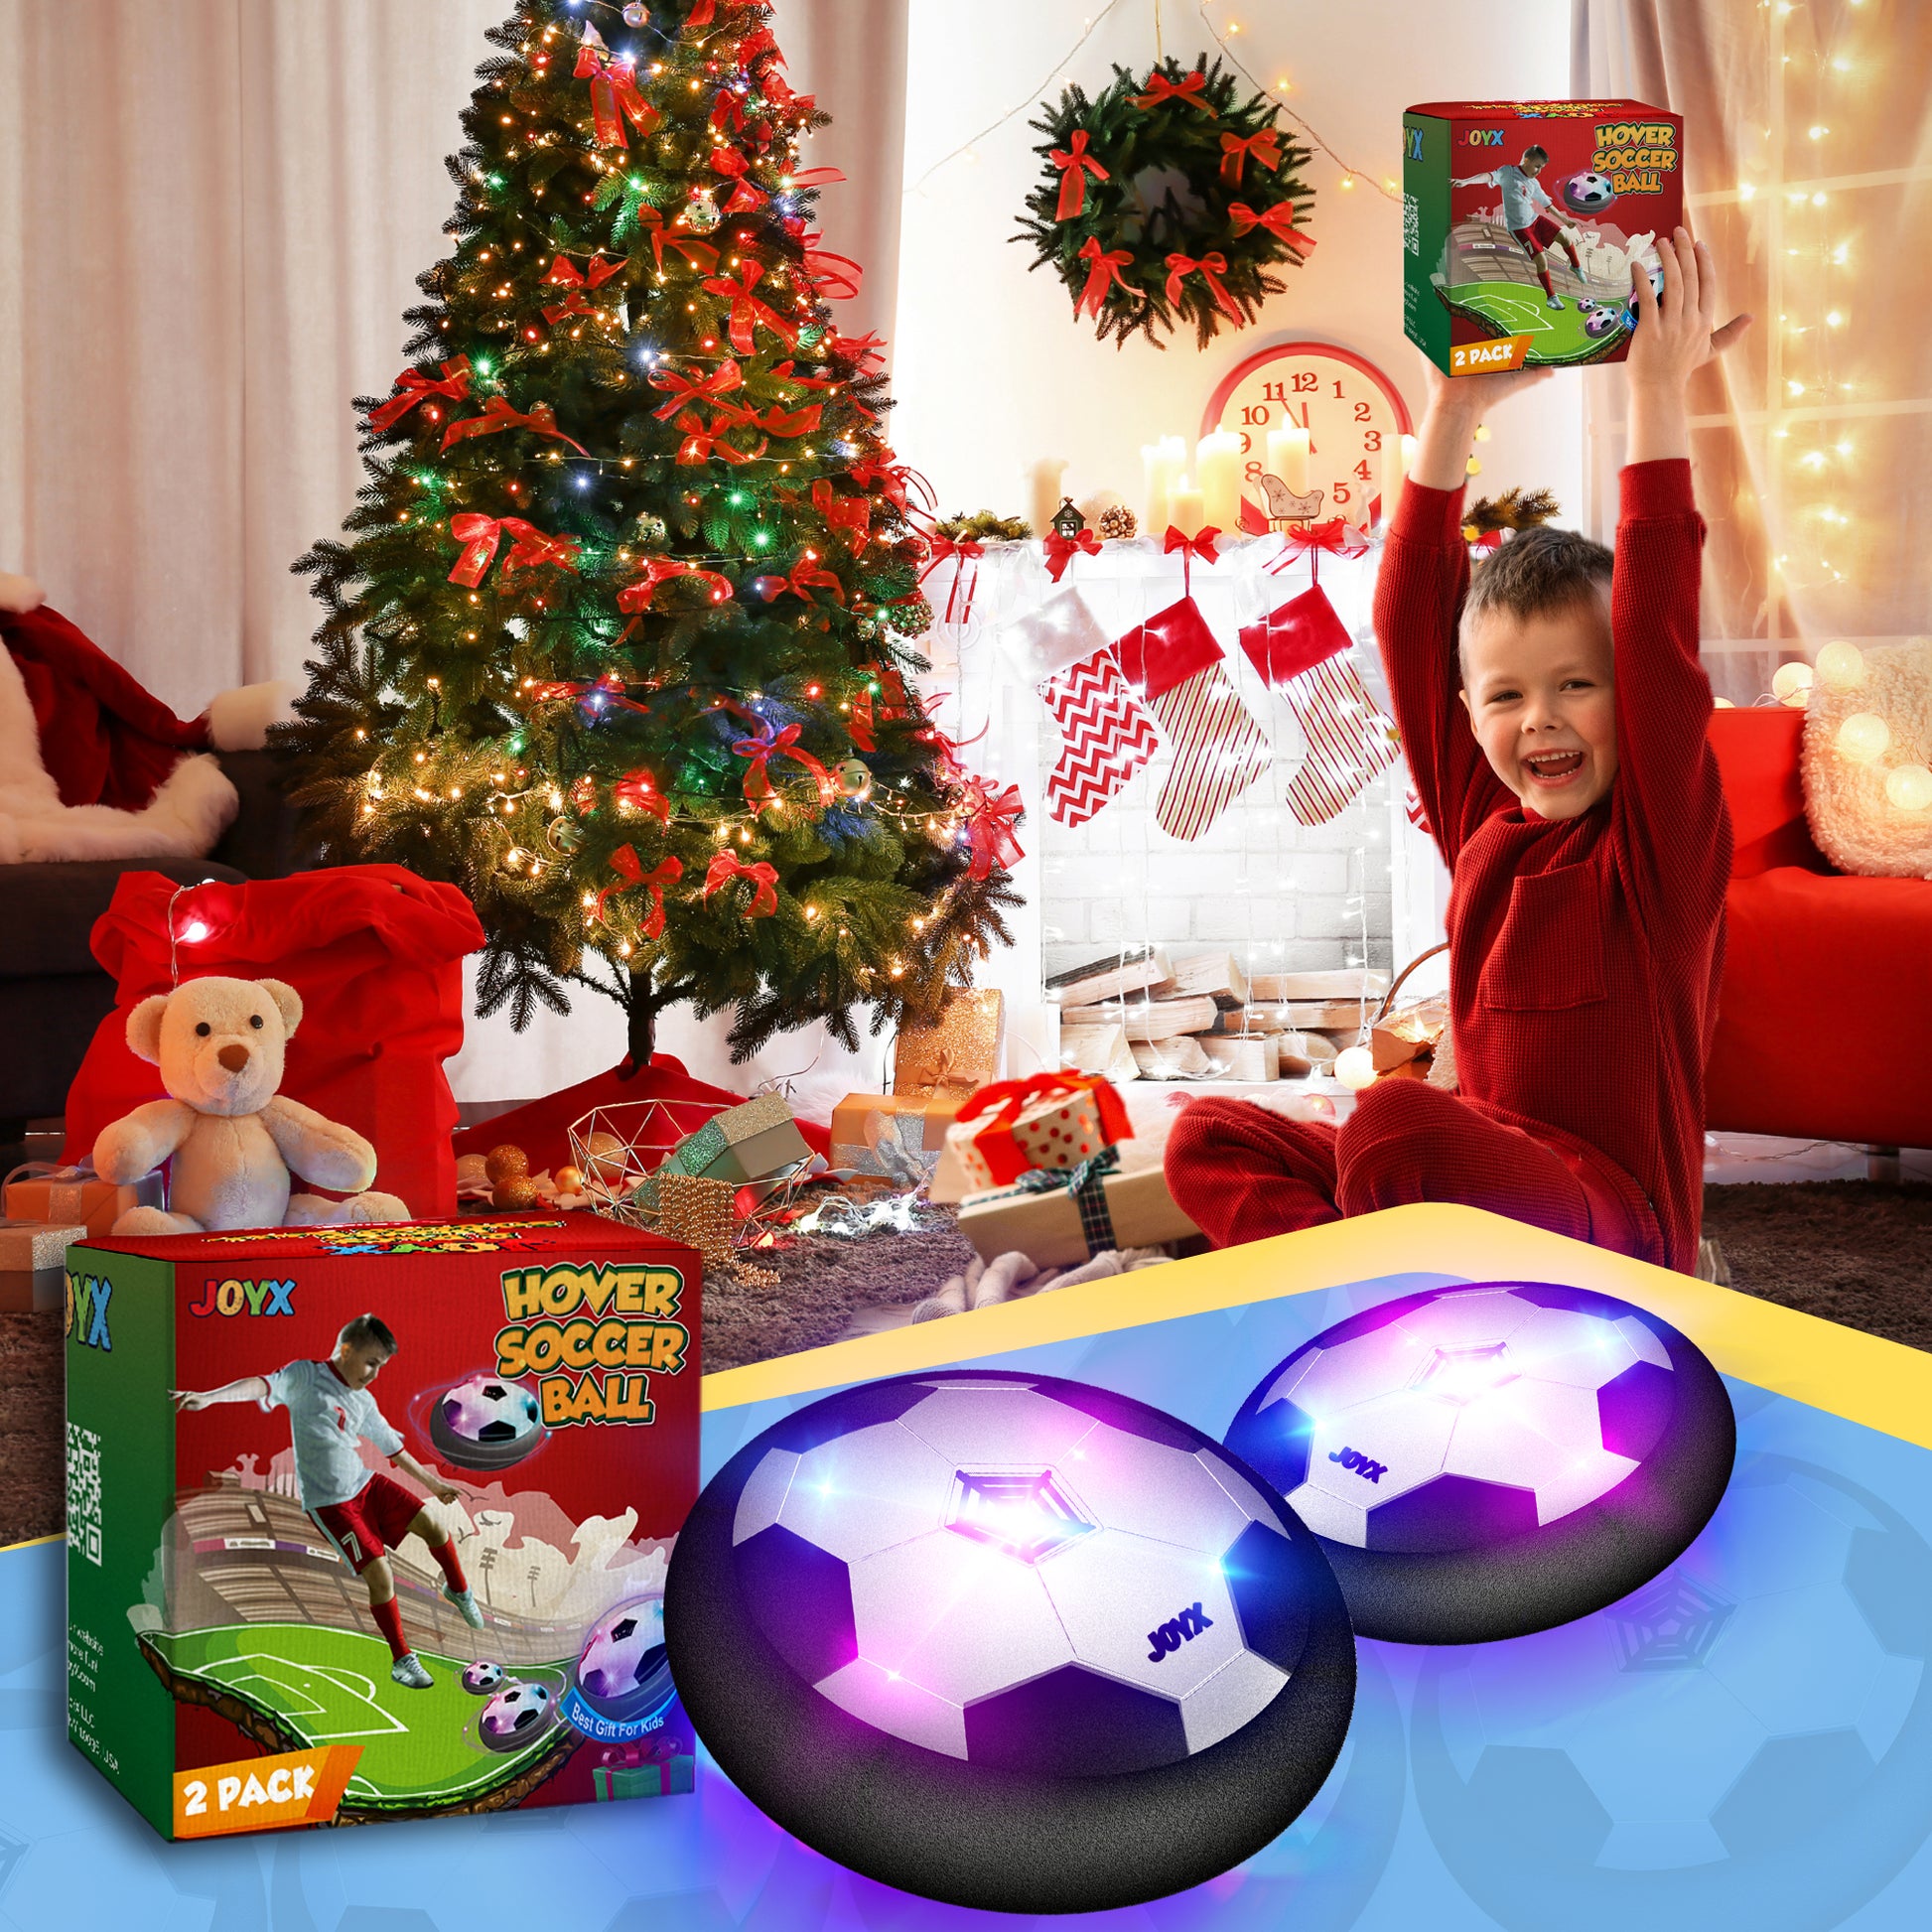 JoyX LED Hover Soccer Ball Set - Indoor Light-up Soccer Fun for Kids